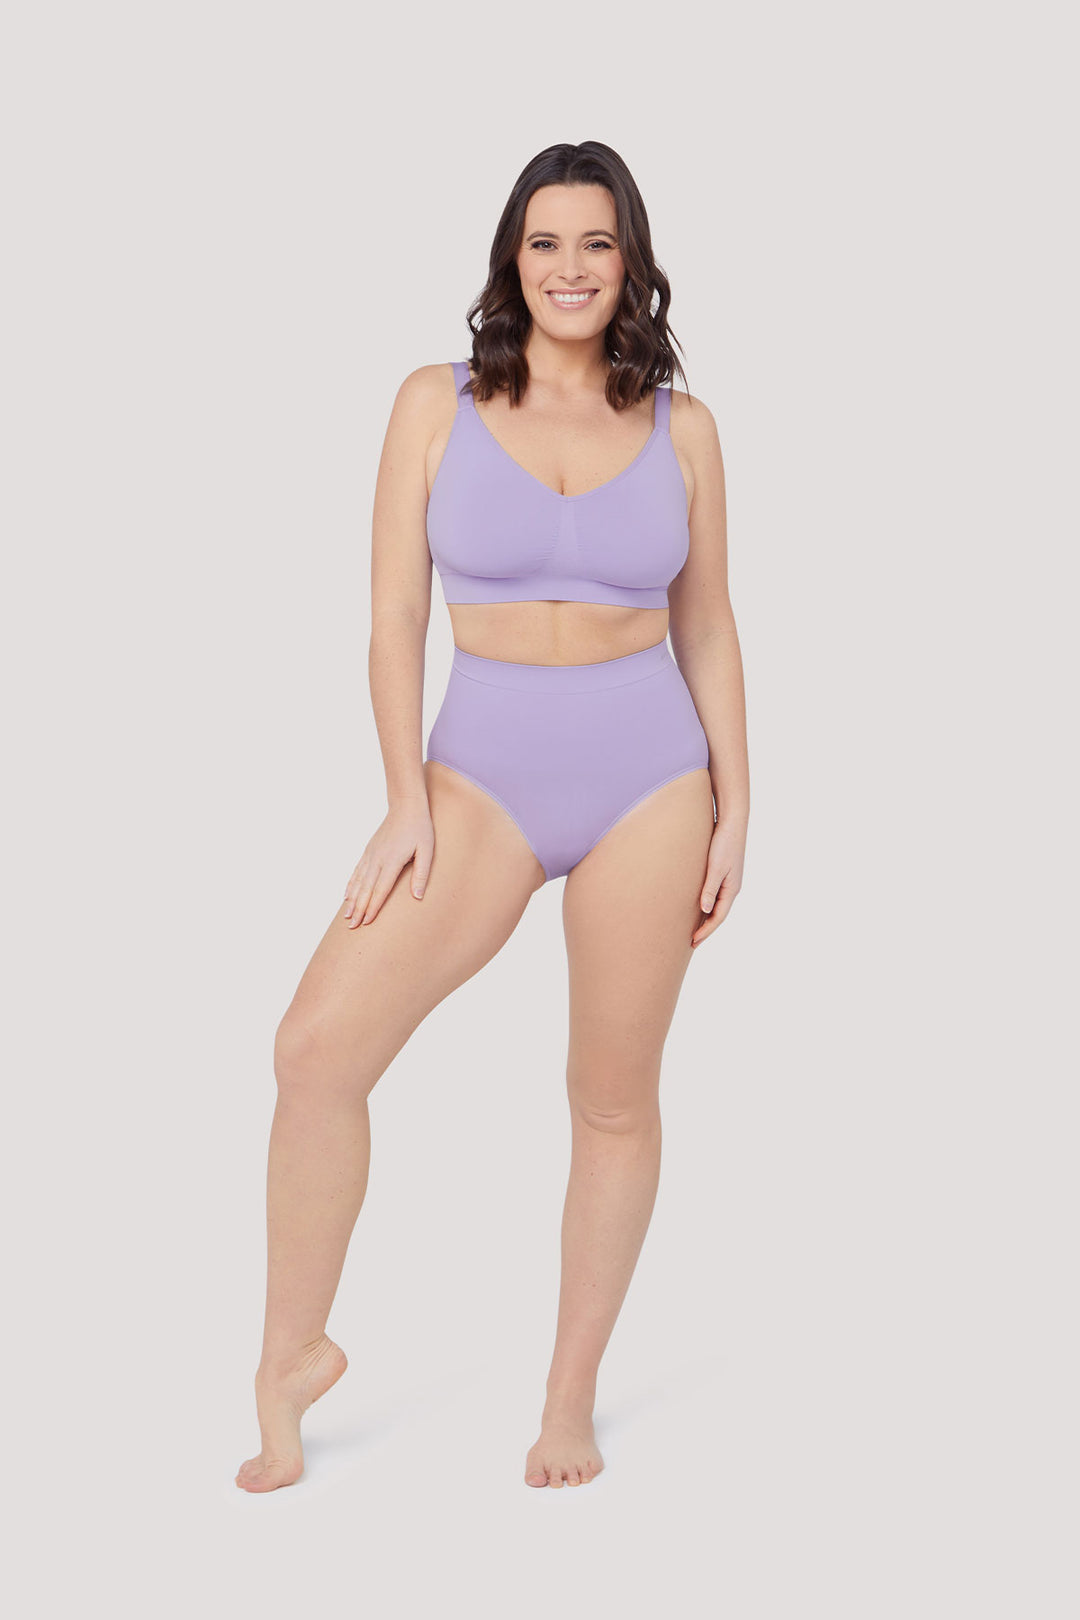 Women's slimming & firming high waist shapewear underwear | Bella Bodies Australia | Lavender